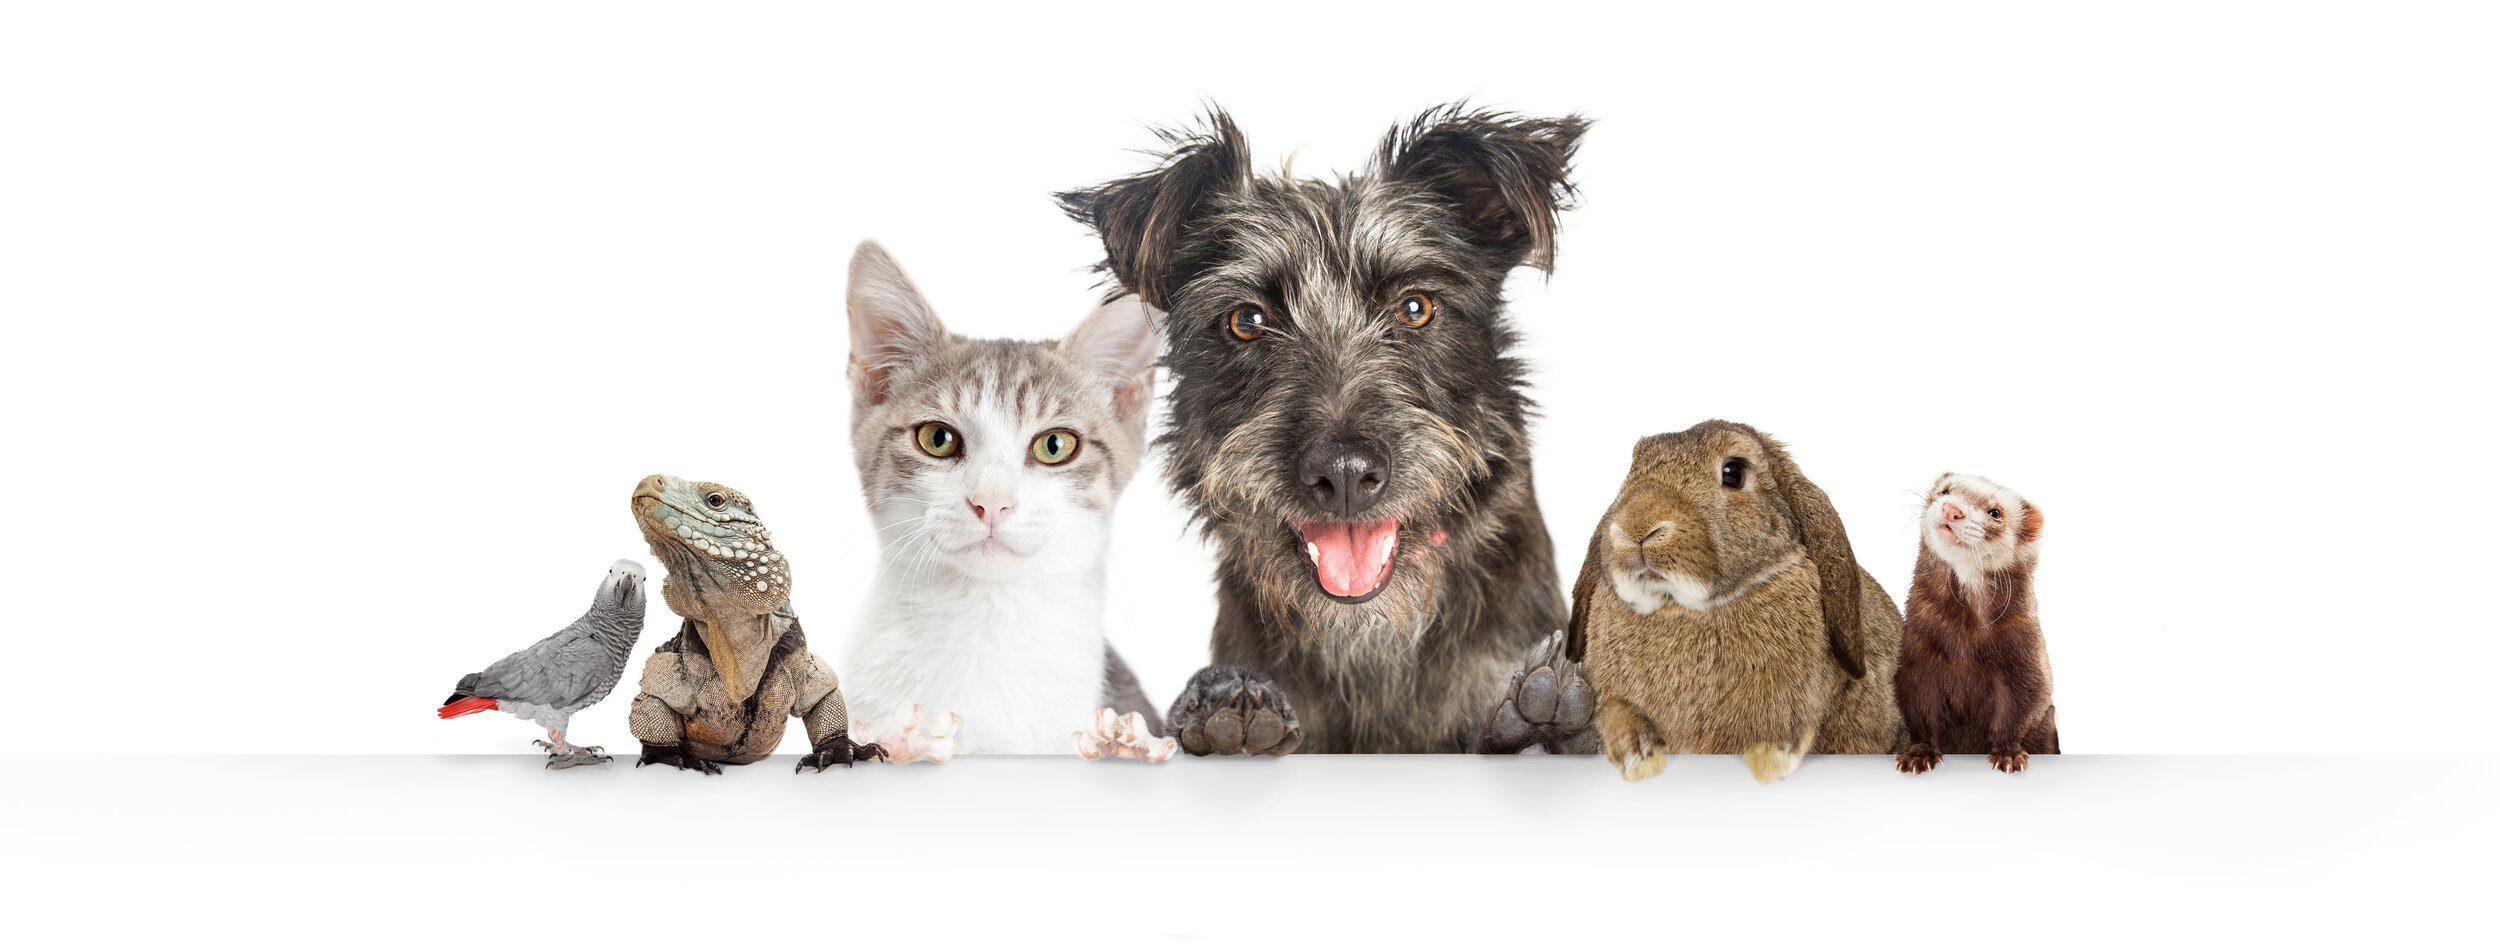 Is Pet Insurance Worth It? - A Pet Insurance Buyer's Guide